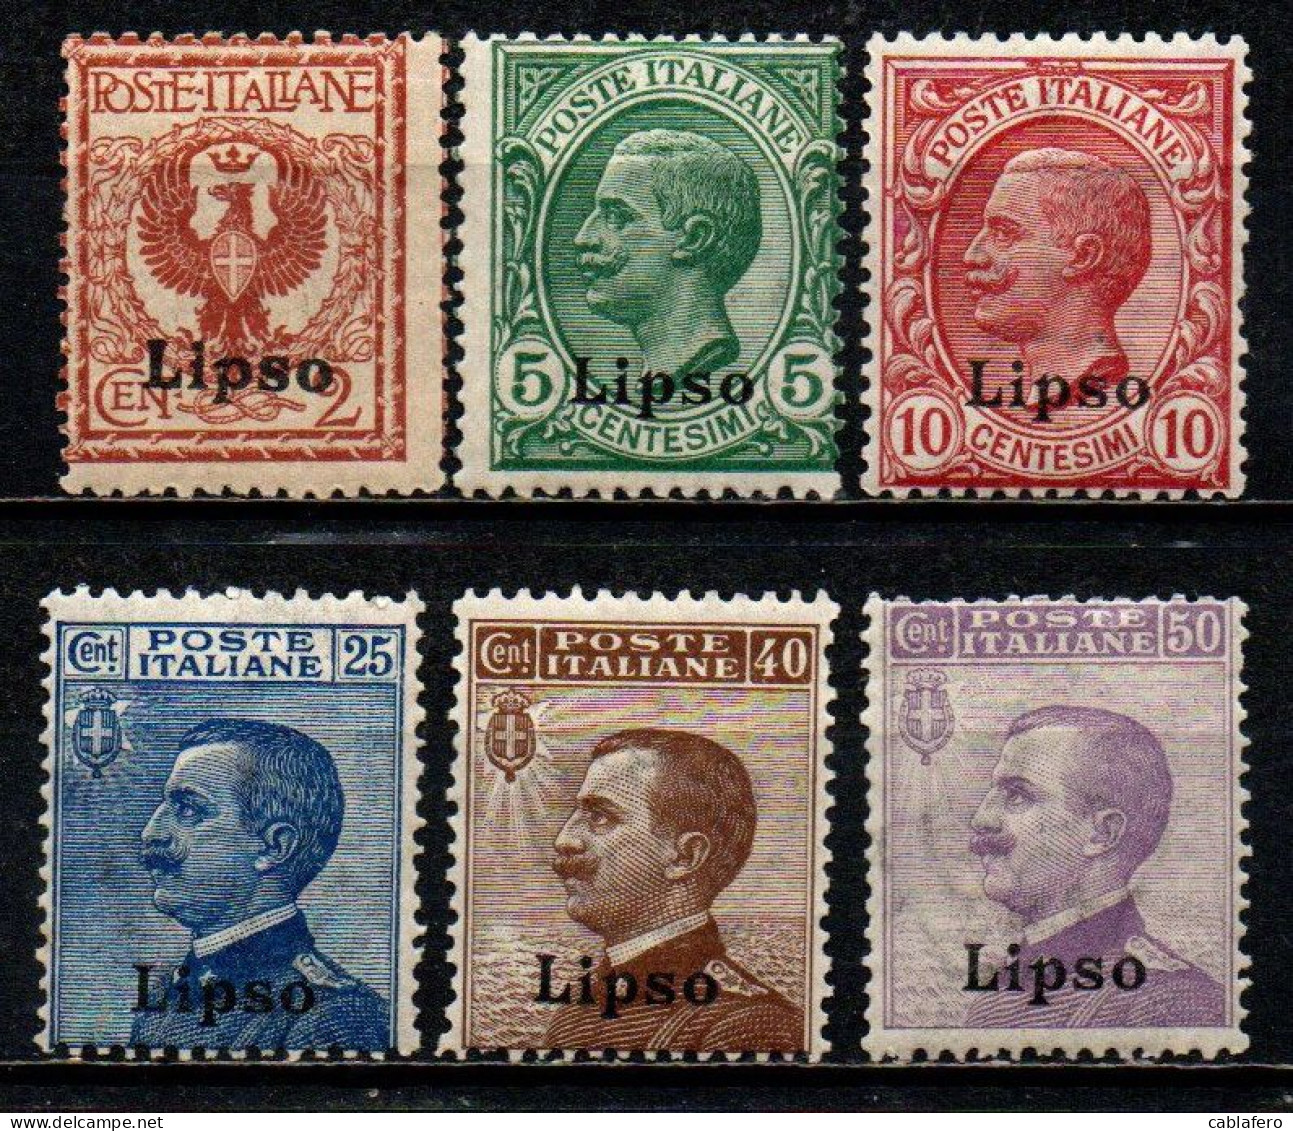 COLONIE ITALIANE - LIPSO - 1912 - EFFIGIE DEL RE VITTORIO EMANUELE III - MNH - Egeo (Lipso)